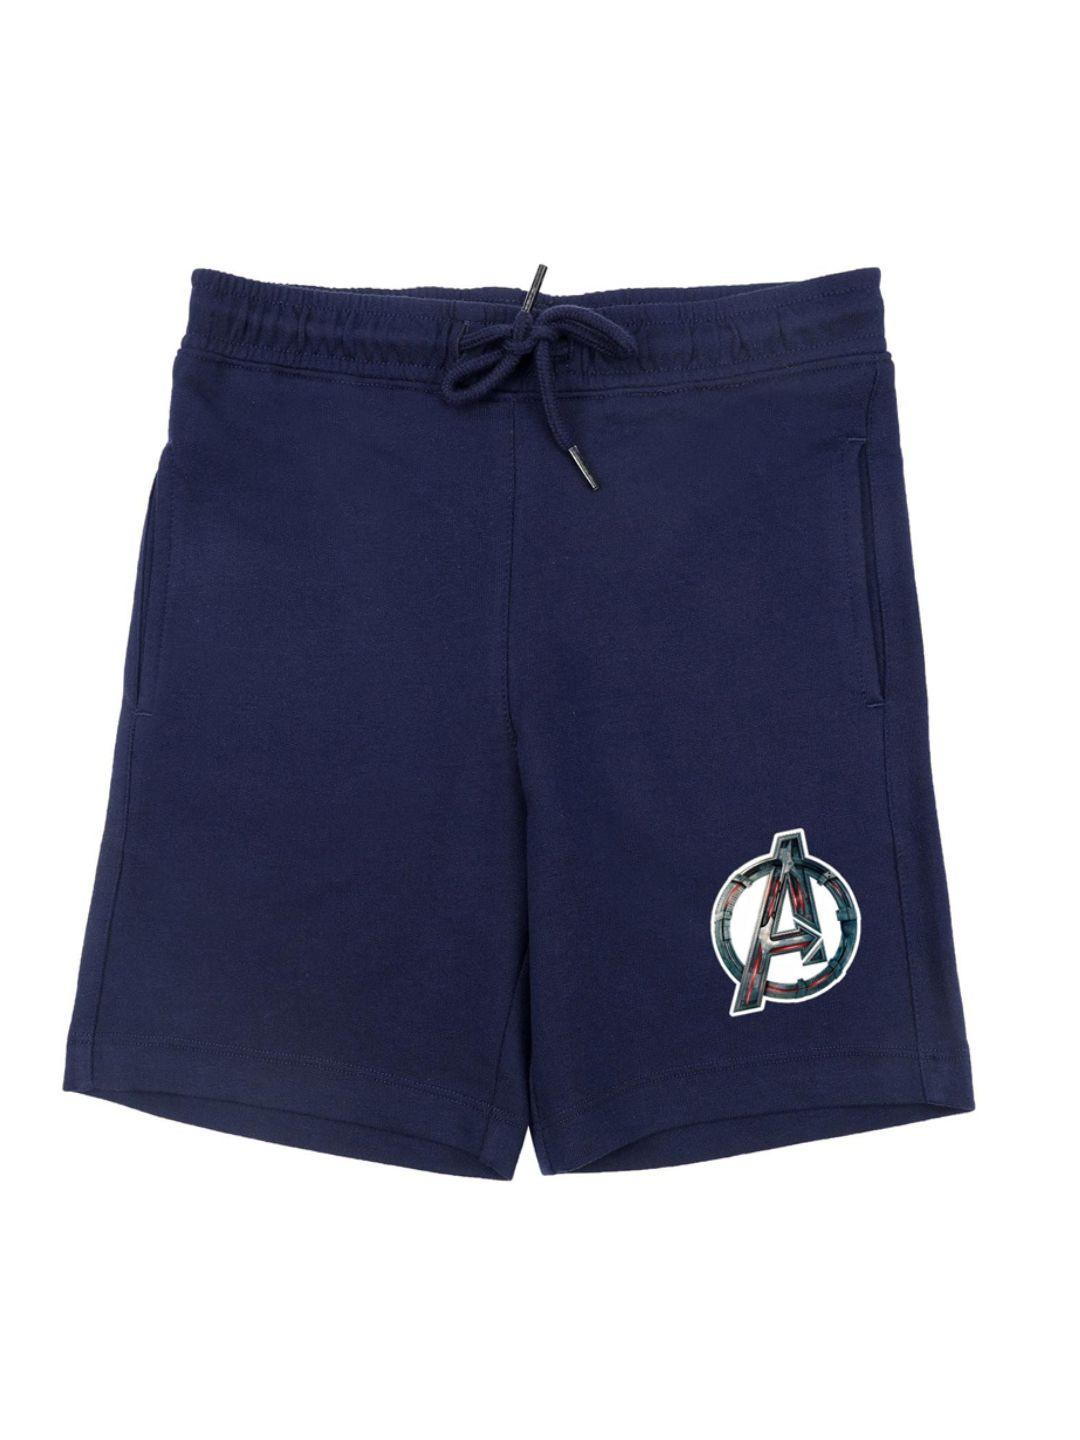 marvel by wear your mind boys navy blue marvel avengers printed regular fit shorts